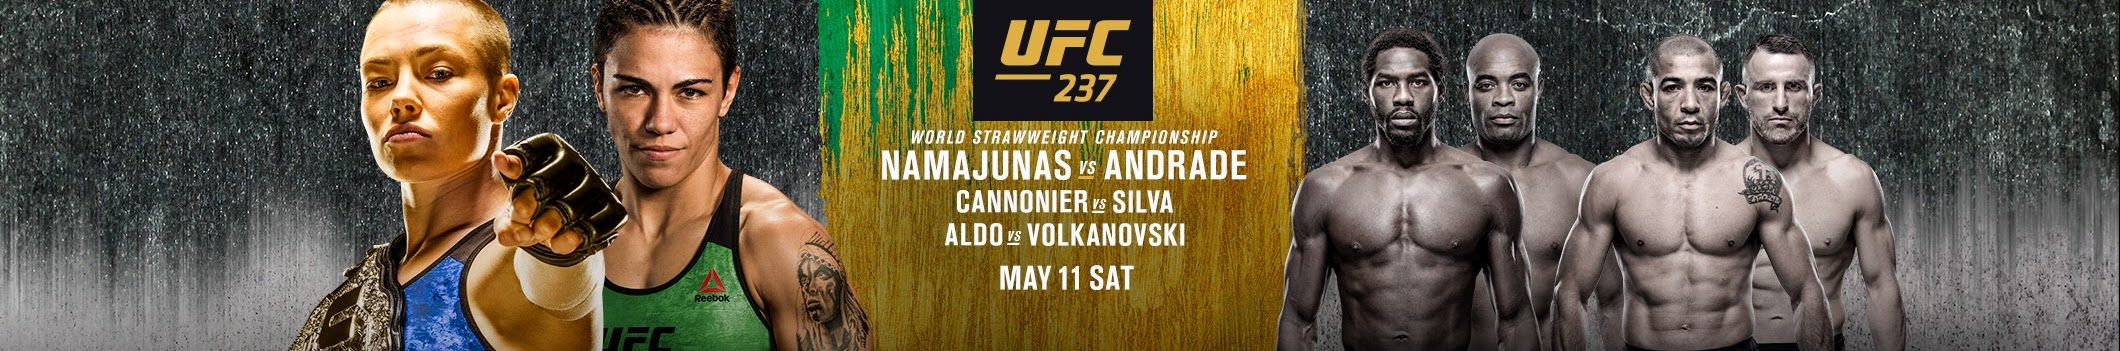 Poster/affiche UFC 237